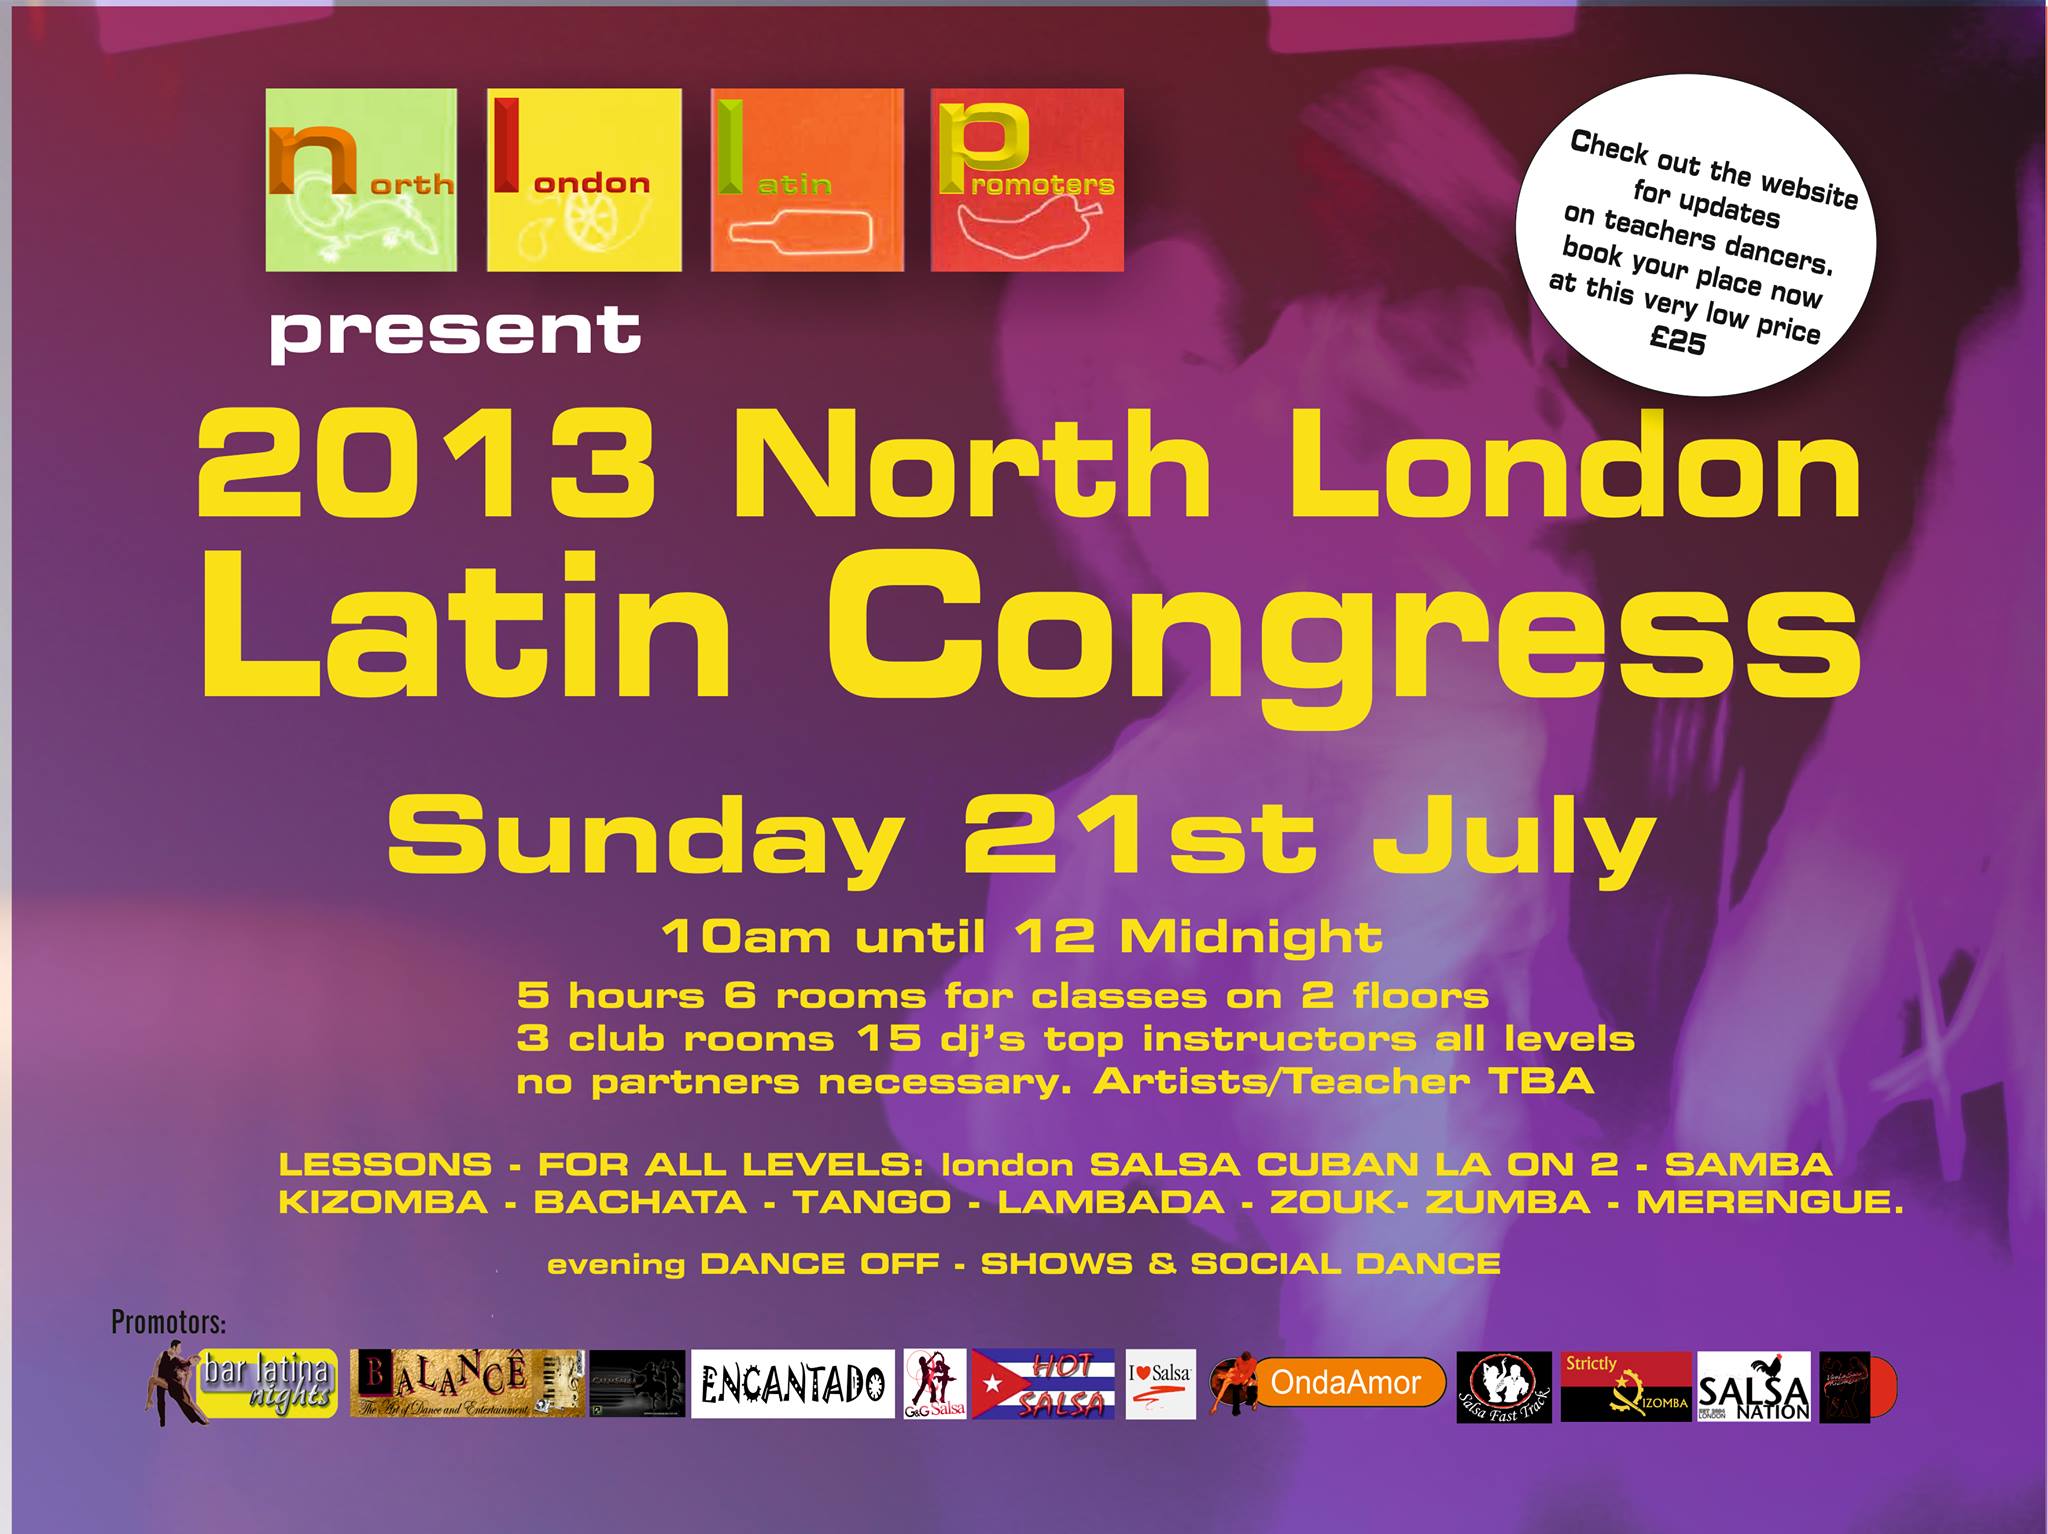 The North London Latin Congress